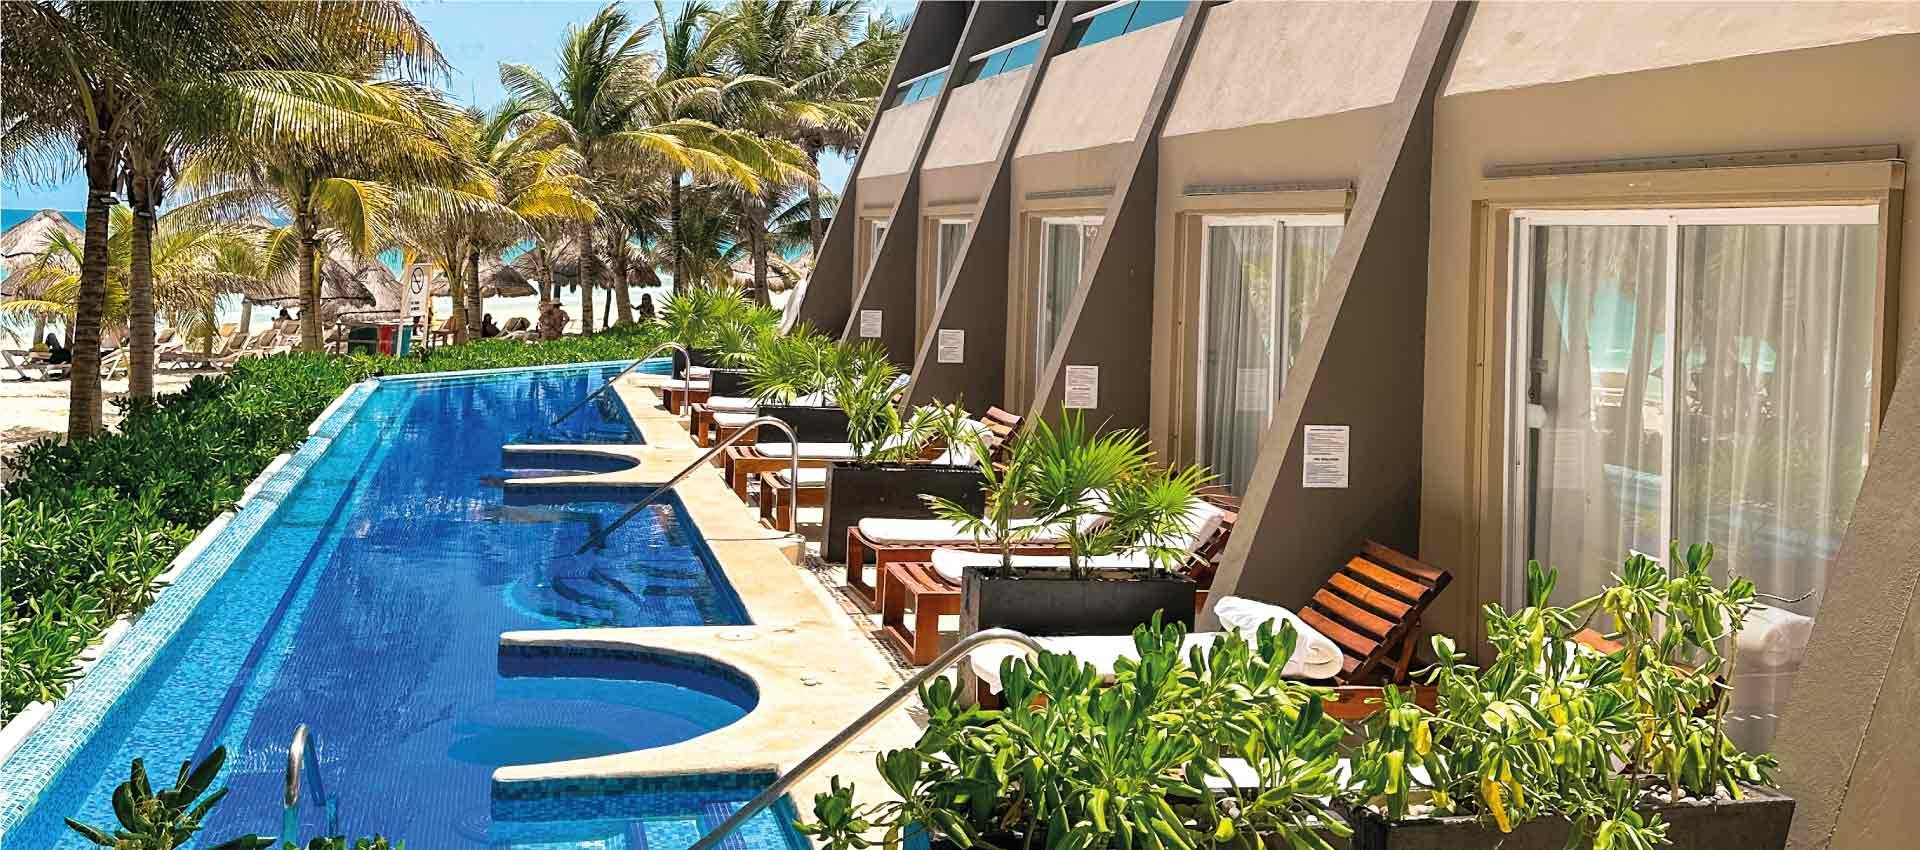  Flamingo Cancun Resort Hotel